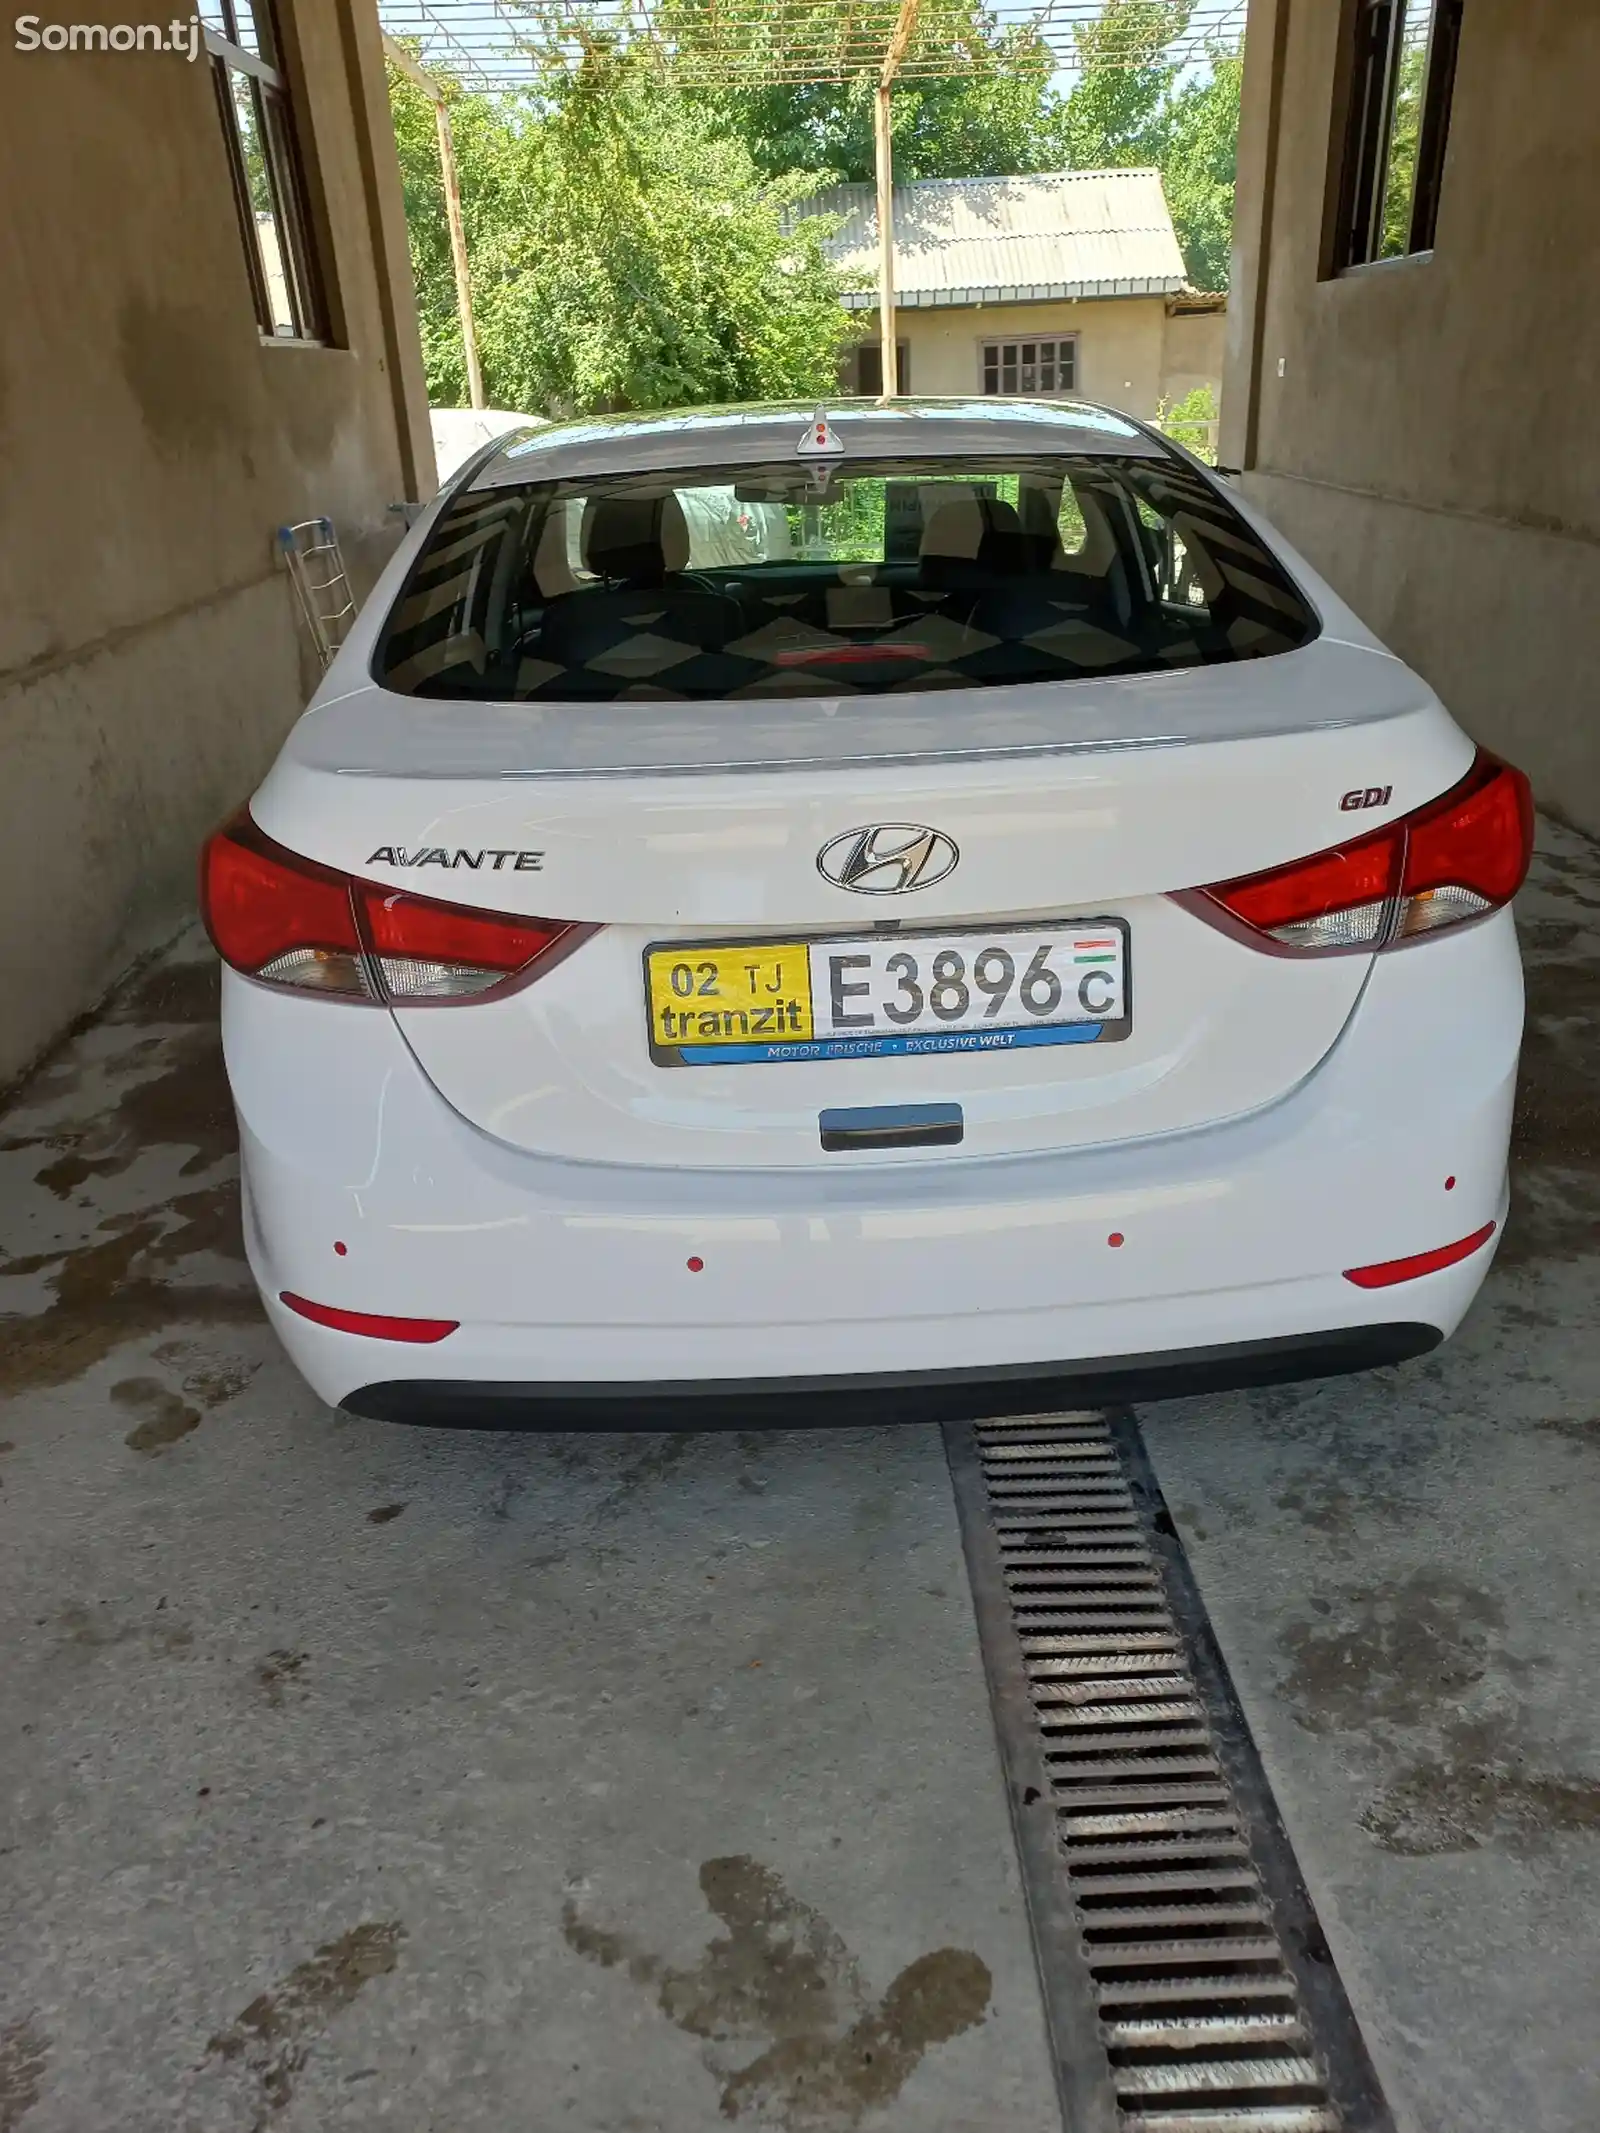 Hyundai Avante, 2015-2